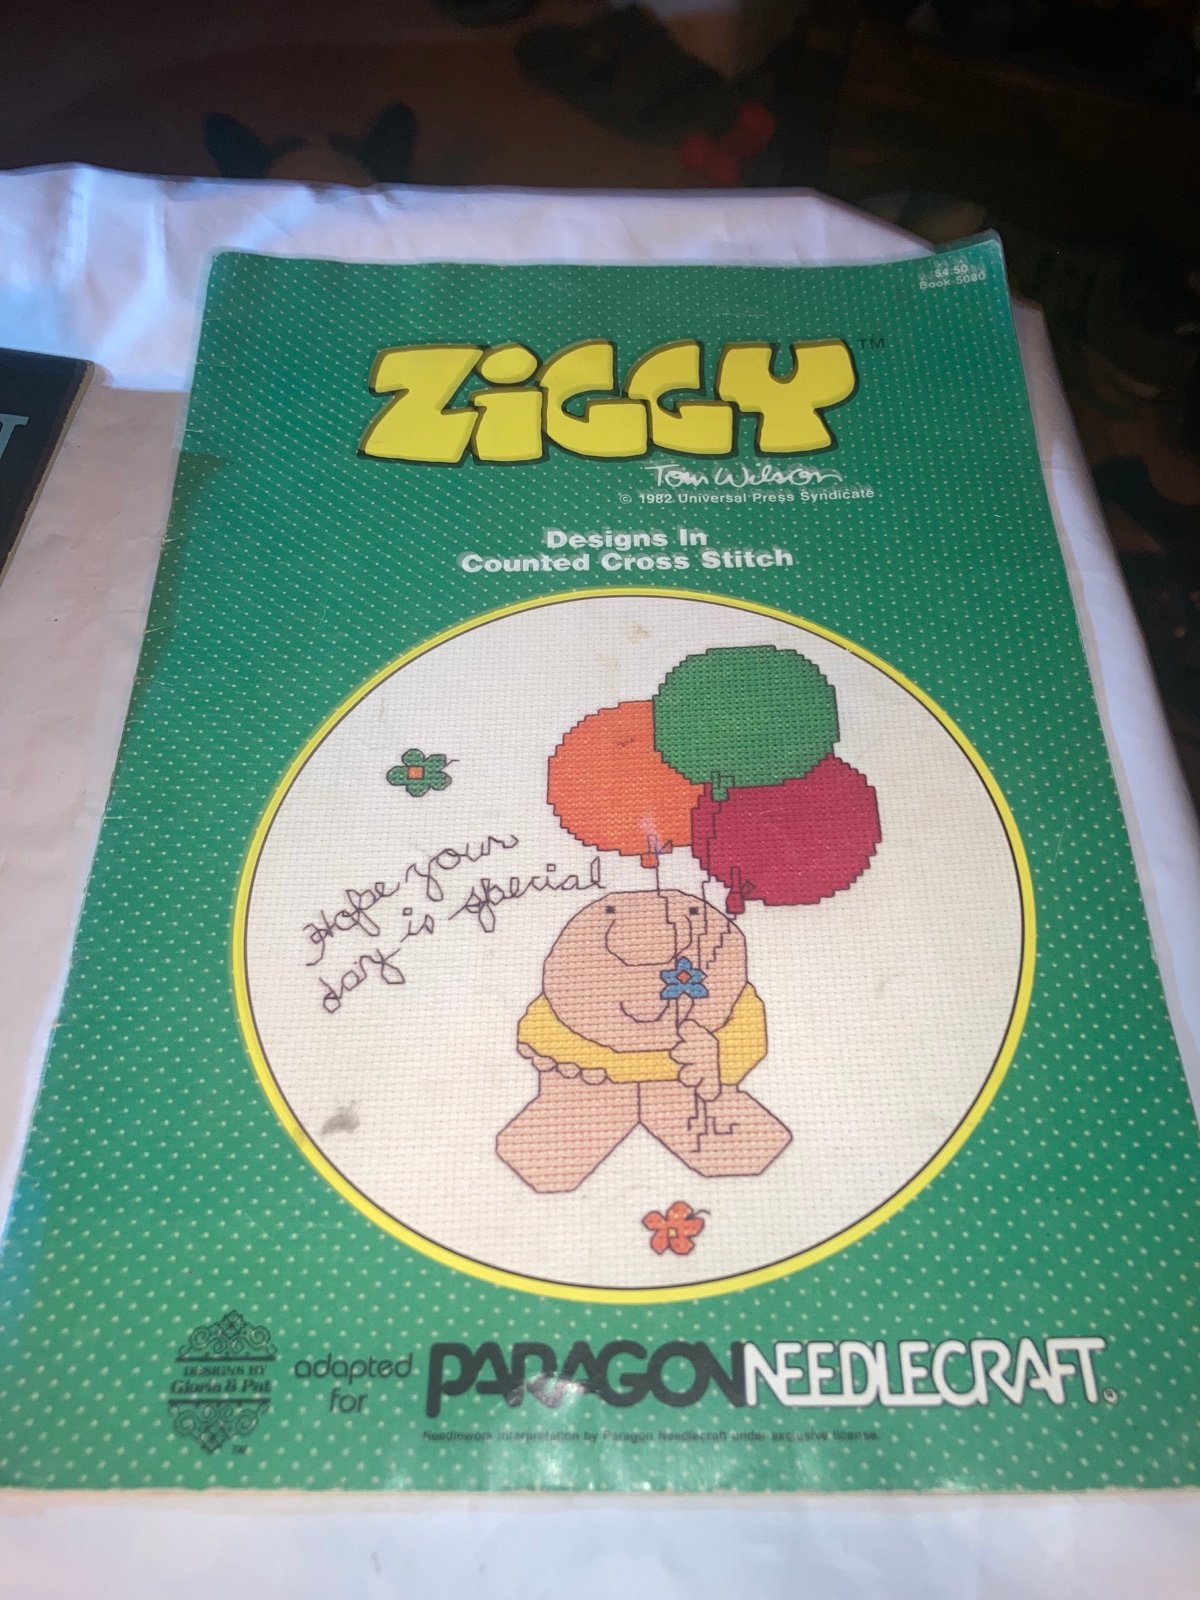 Ziggy 1980’s Paragon Needlecraft Special Day Cross Stitch Pattern Book iDeO9DTMT